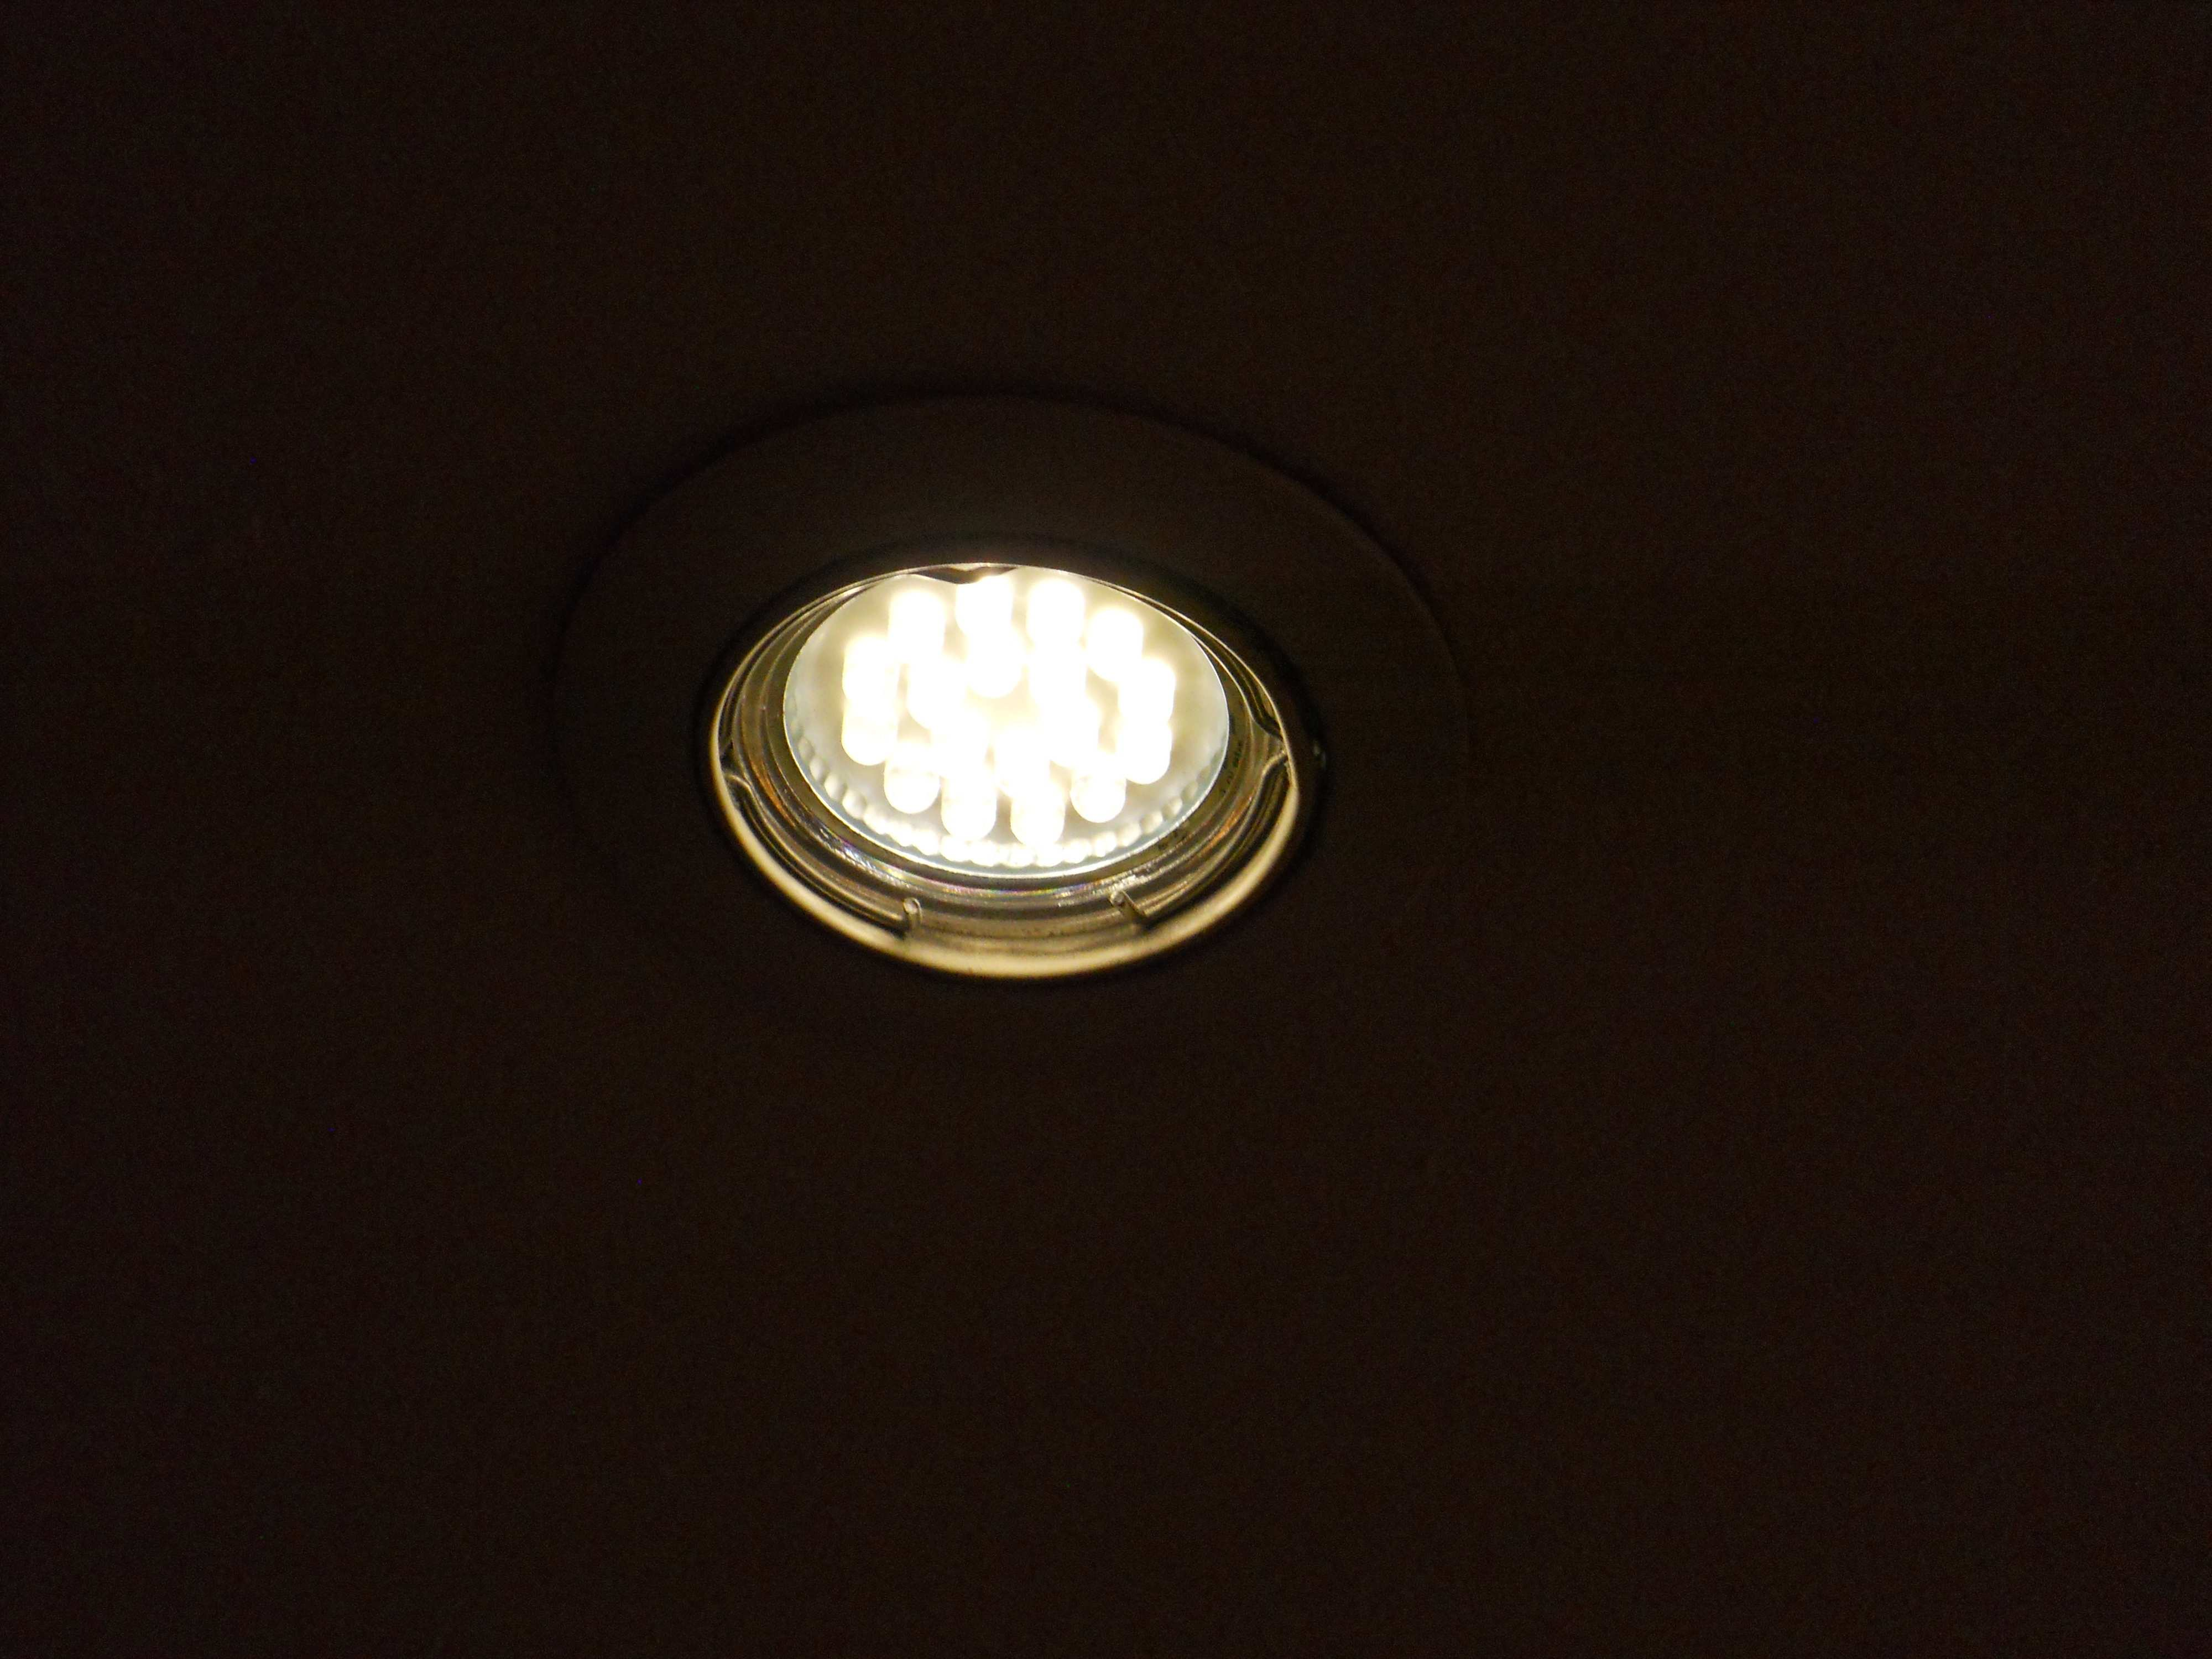 Optimierung Beleuchtung (siehe Nachmittag) Betriebsbeleuchtung: - Flur, Toiletten, Garderobe, Kühlschränke usw.